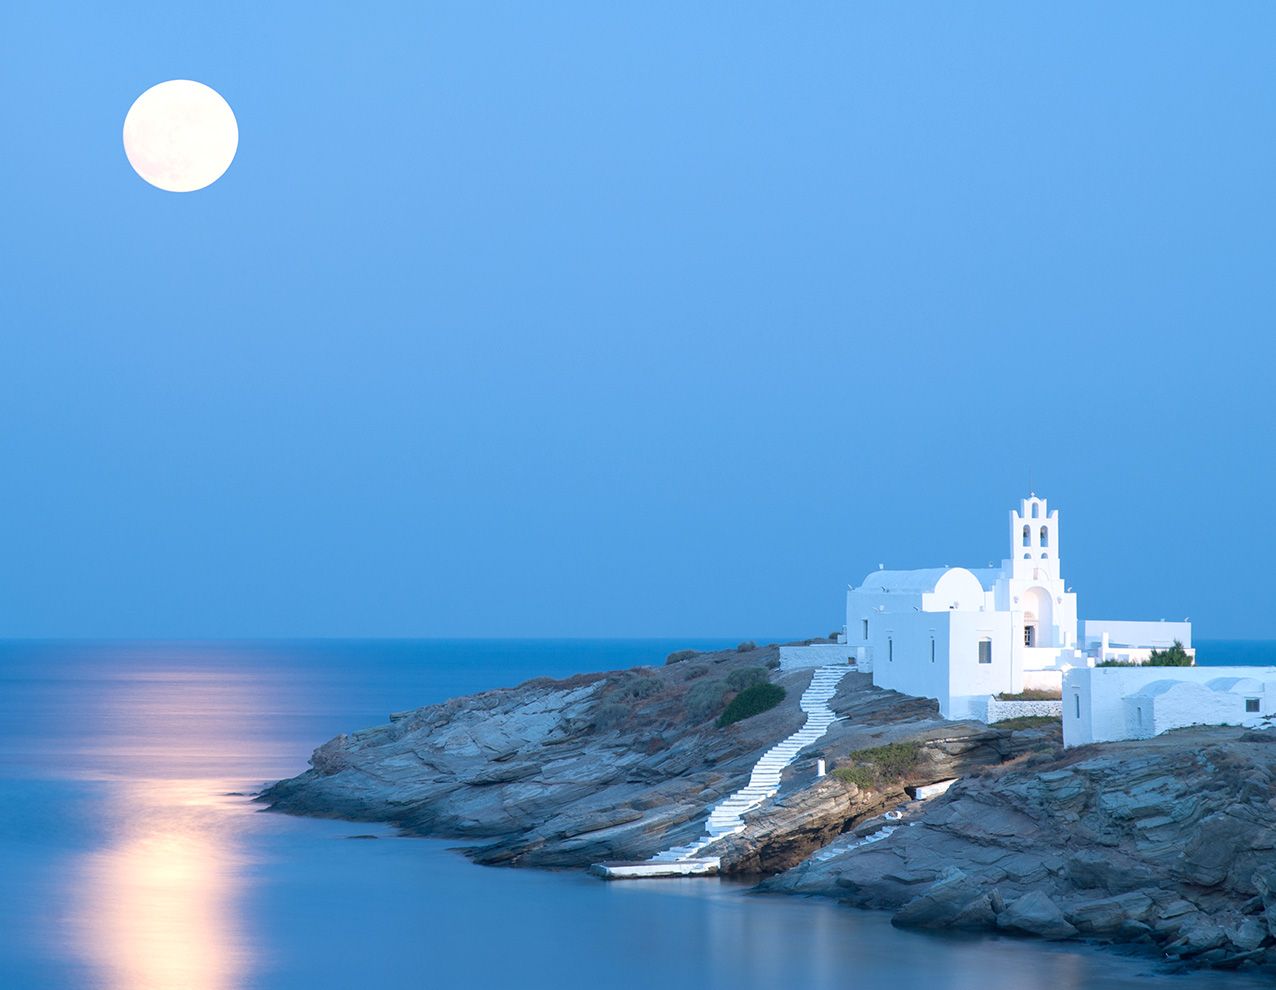 White Chrysopigi church sits on a rocky peninsula at night below a full moon